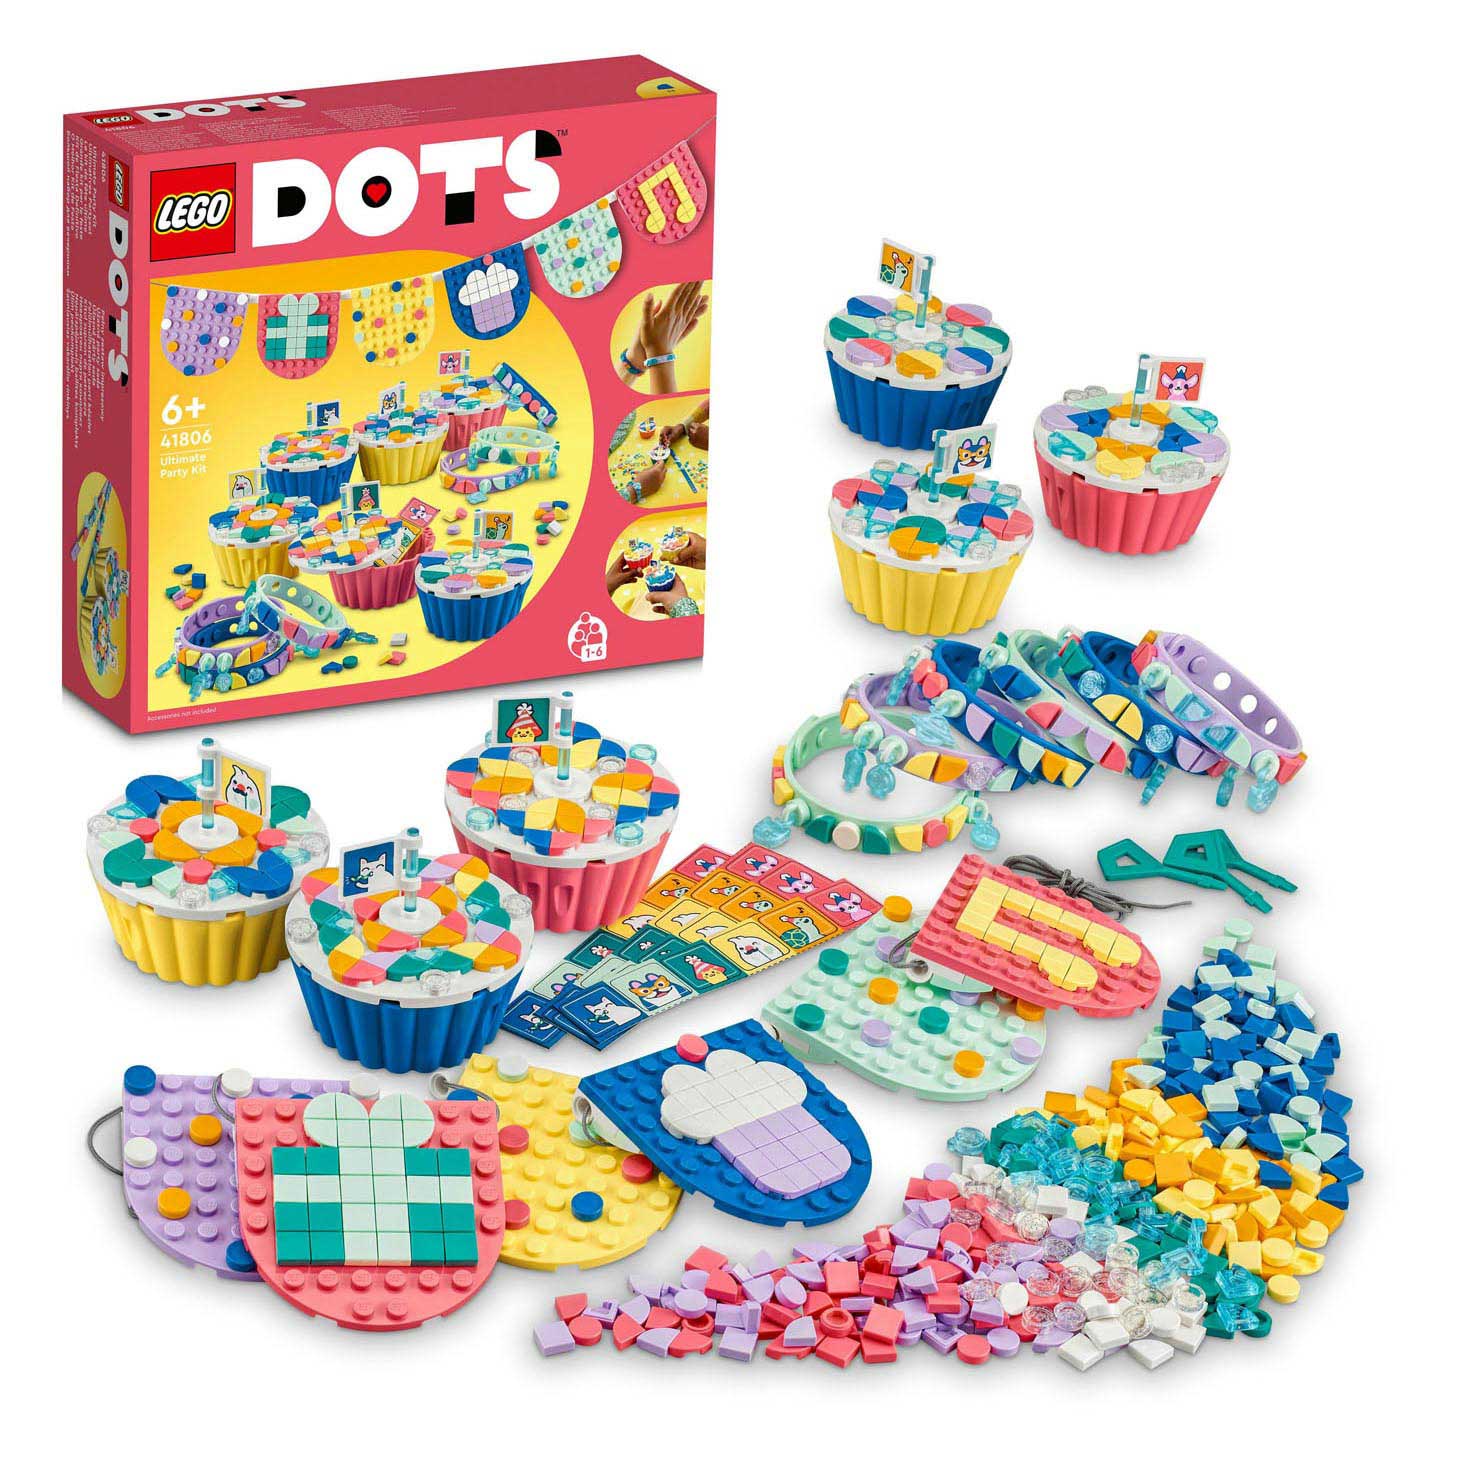 LEGO DOTS 41806 Ultimate Party Thimble Toys Set 